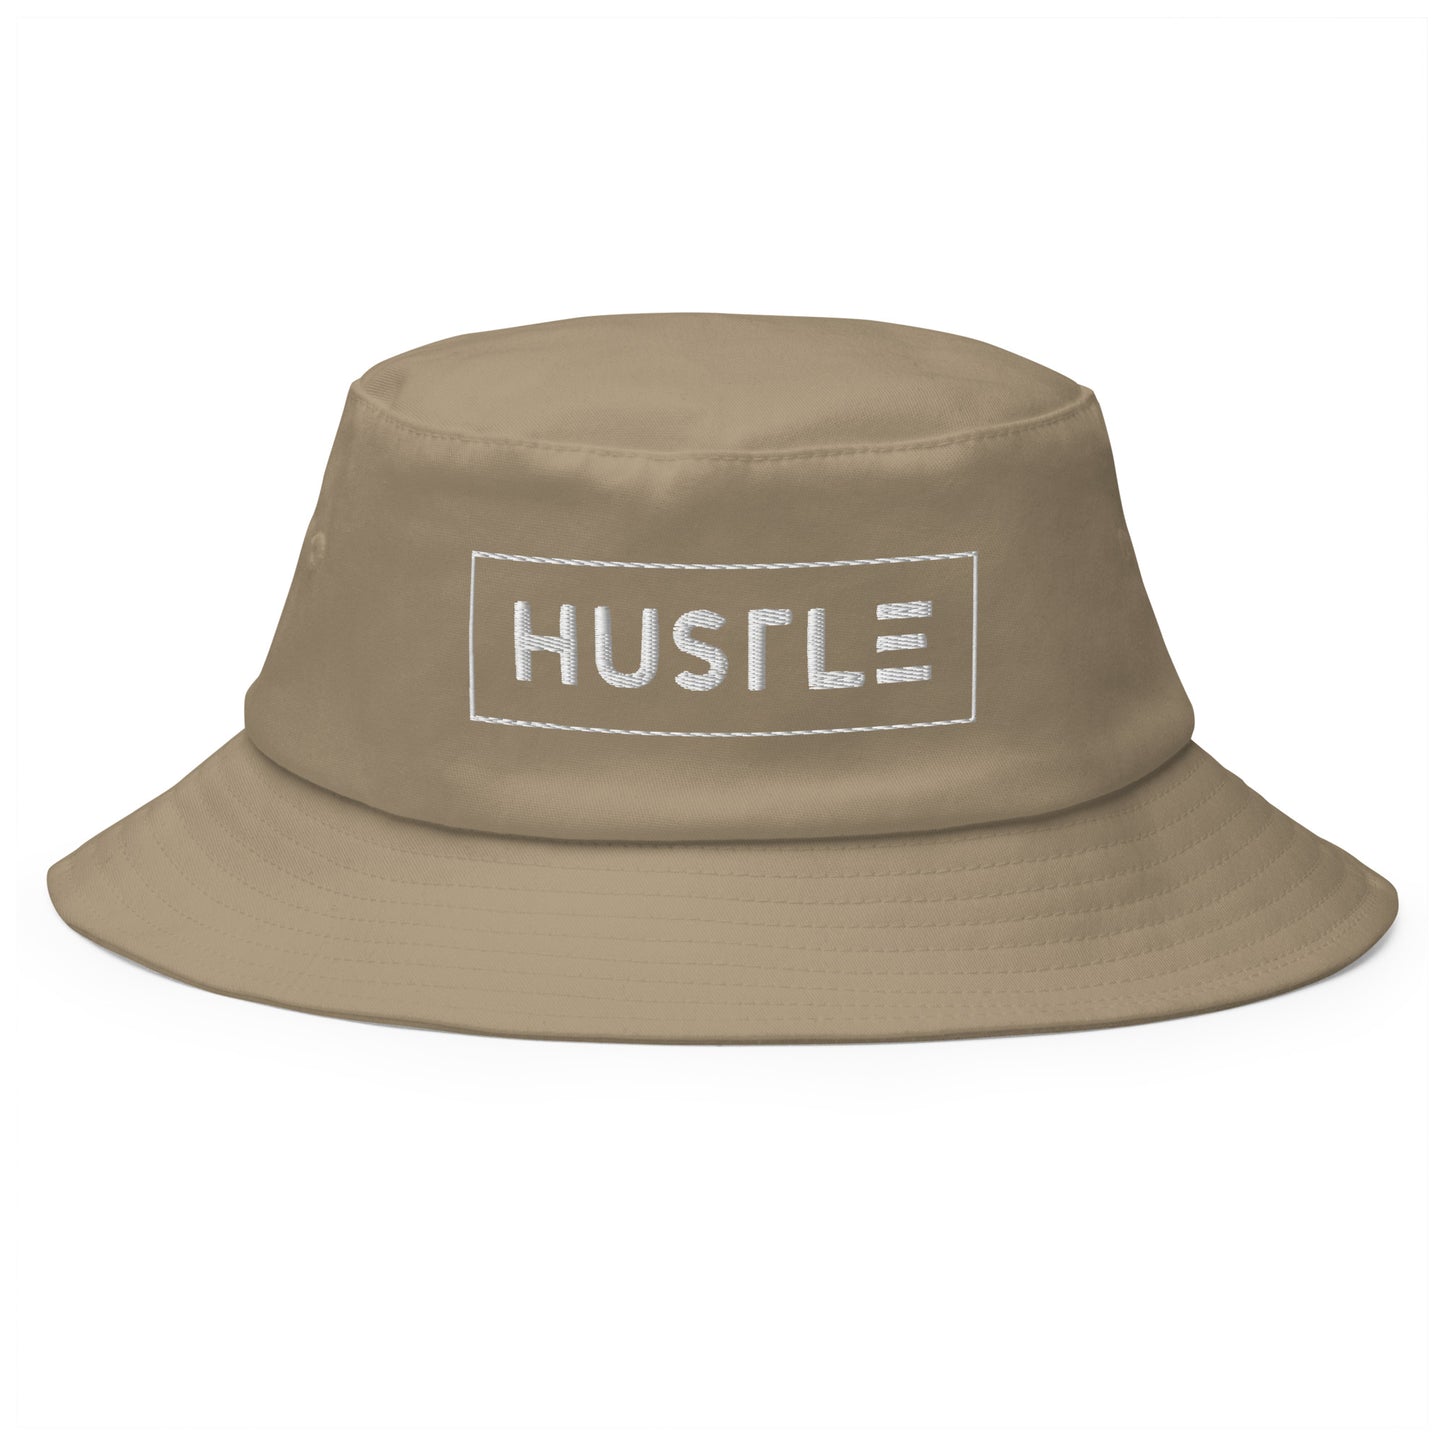 Hustle (v1 White) Old School Bucket Hat